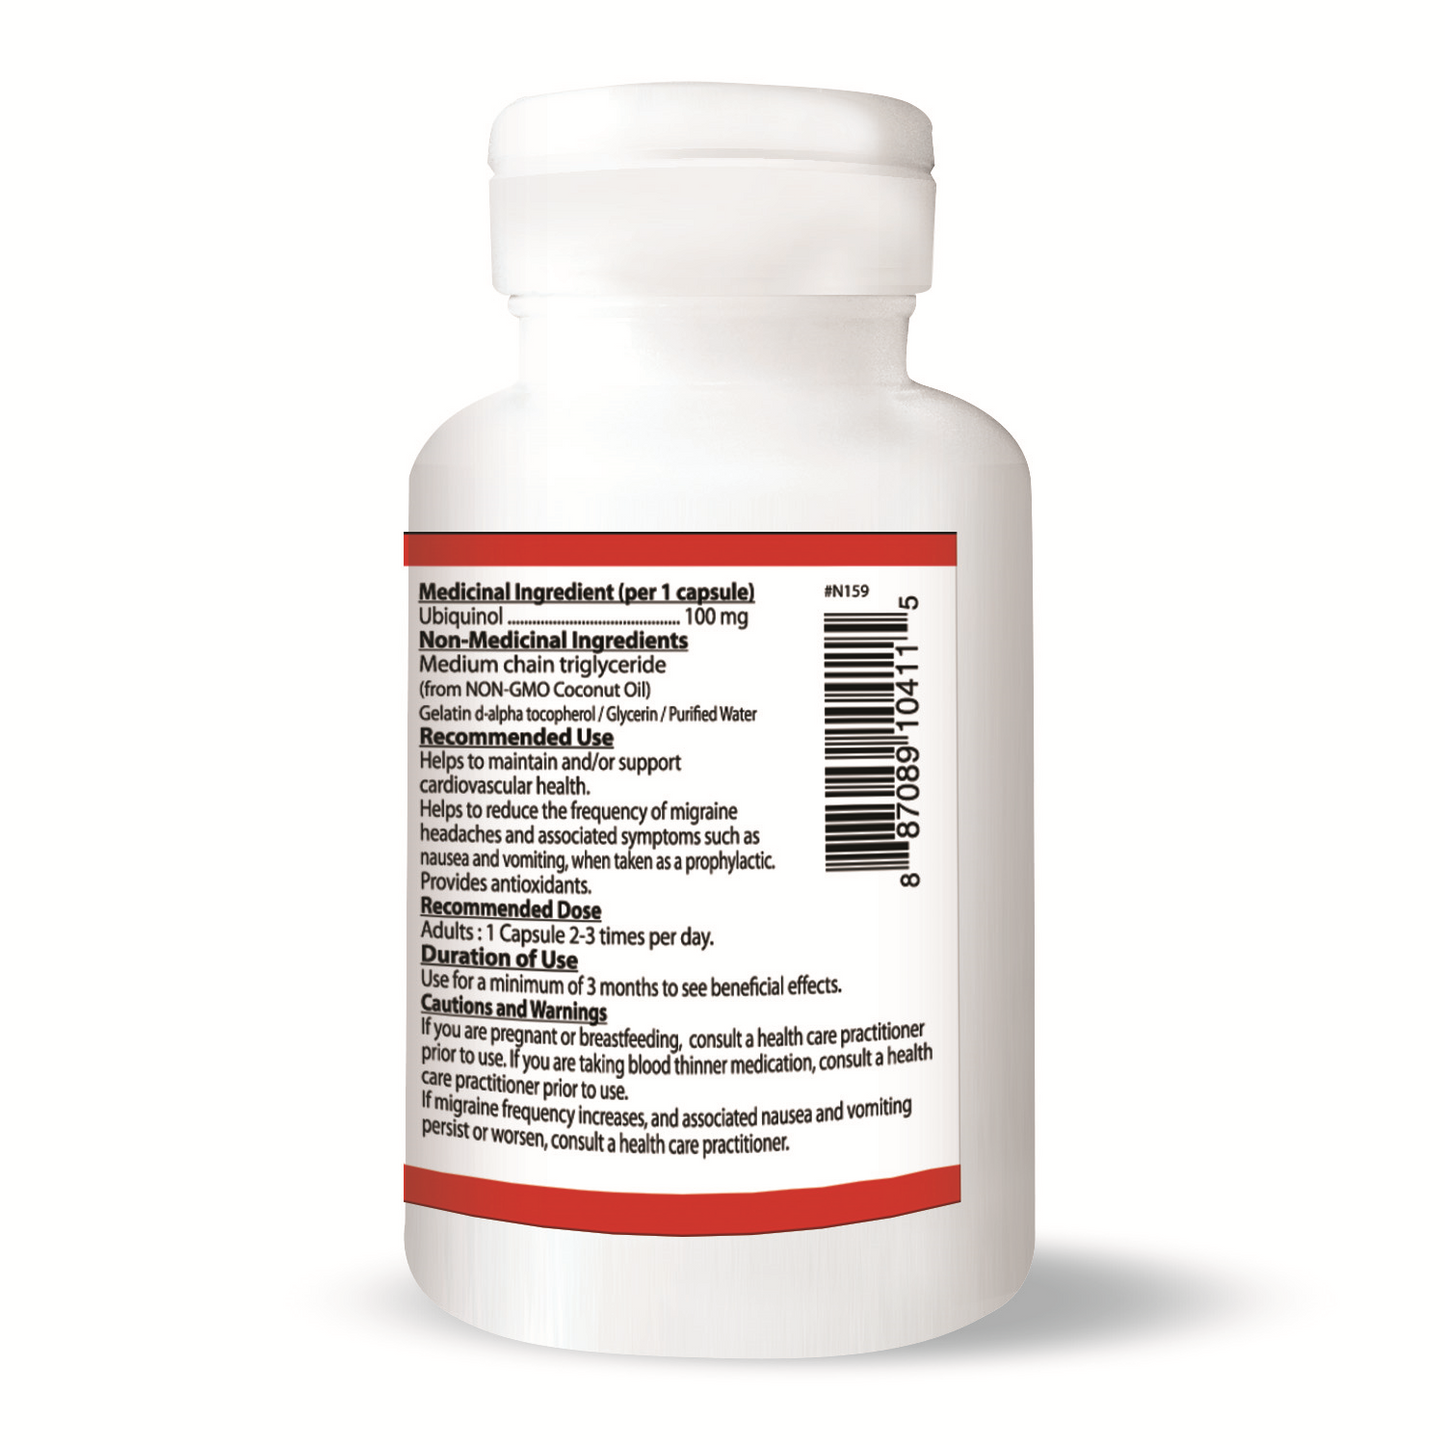 Ubiquinol 100 mg (30 Softgels)